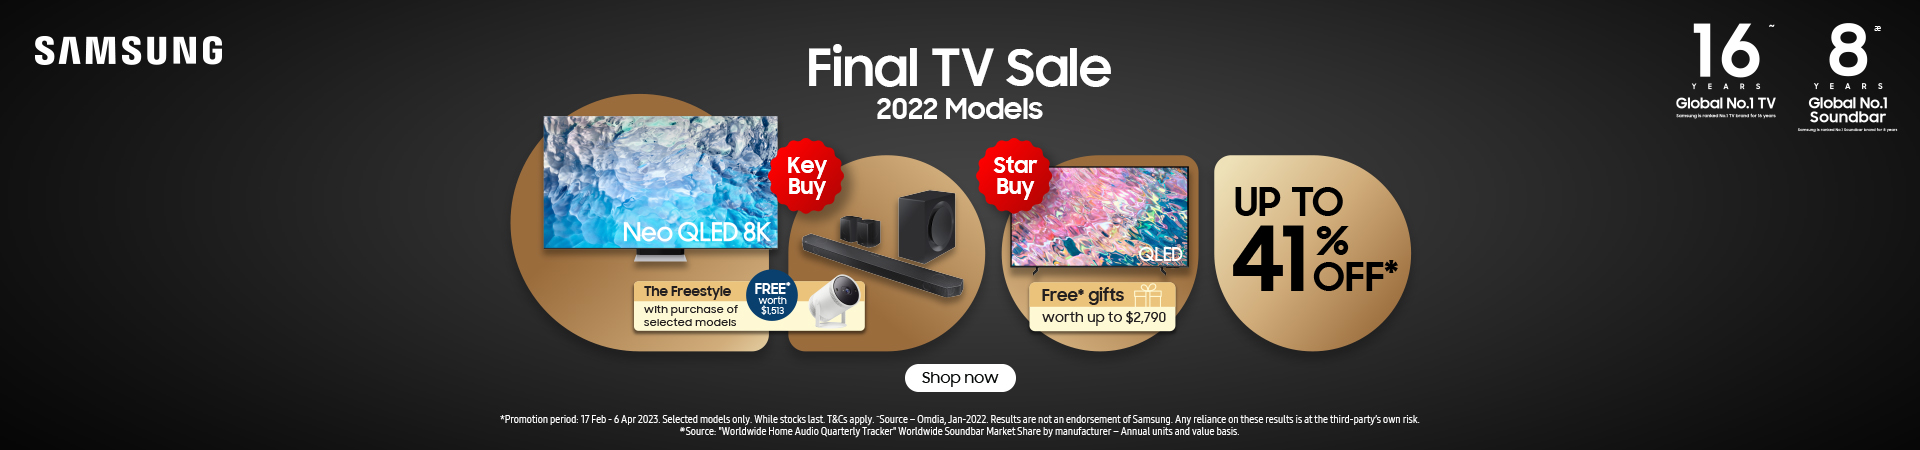 Samsung Final TV Sale